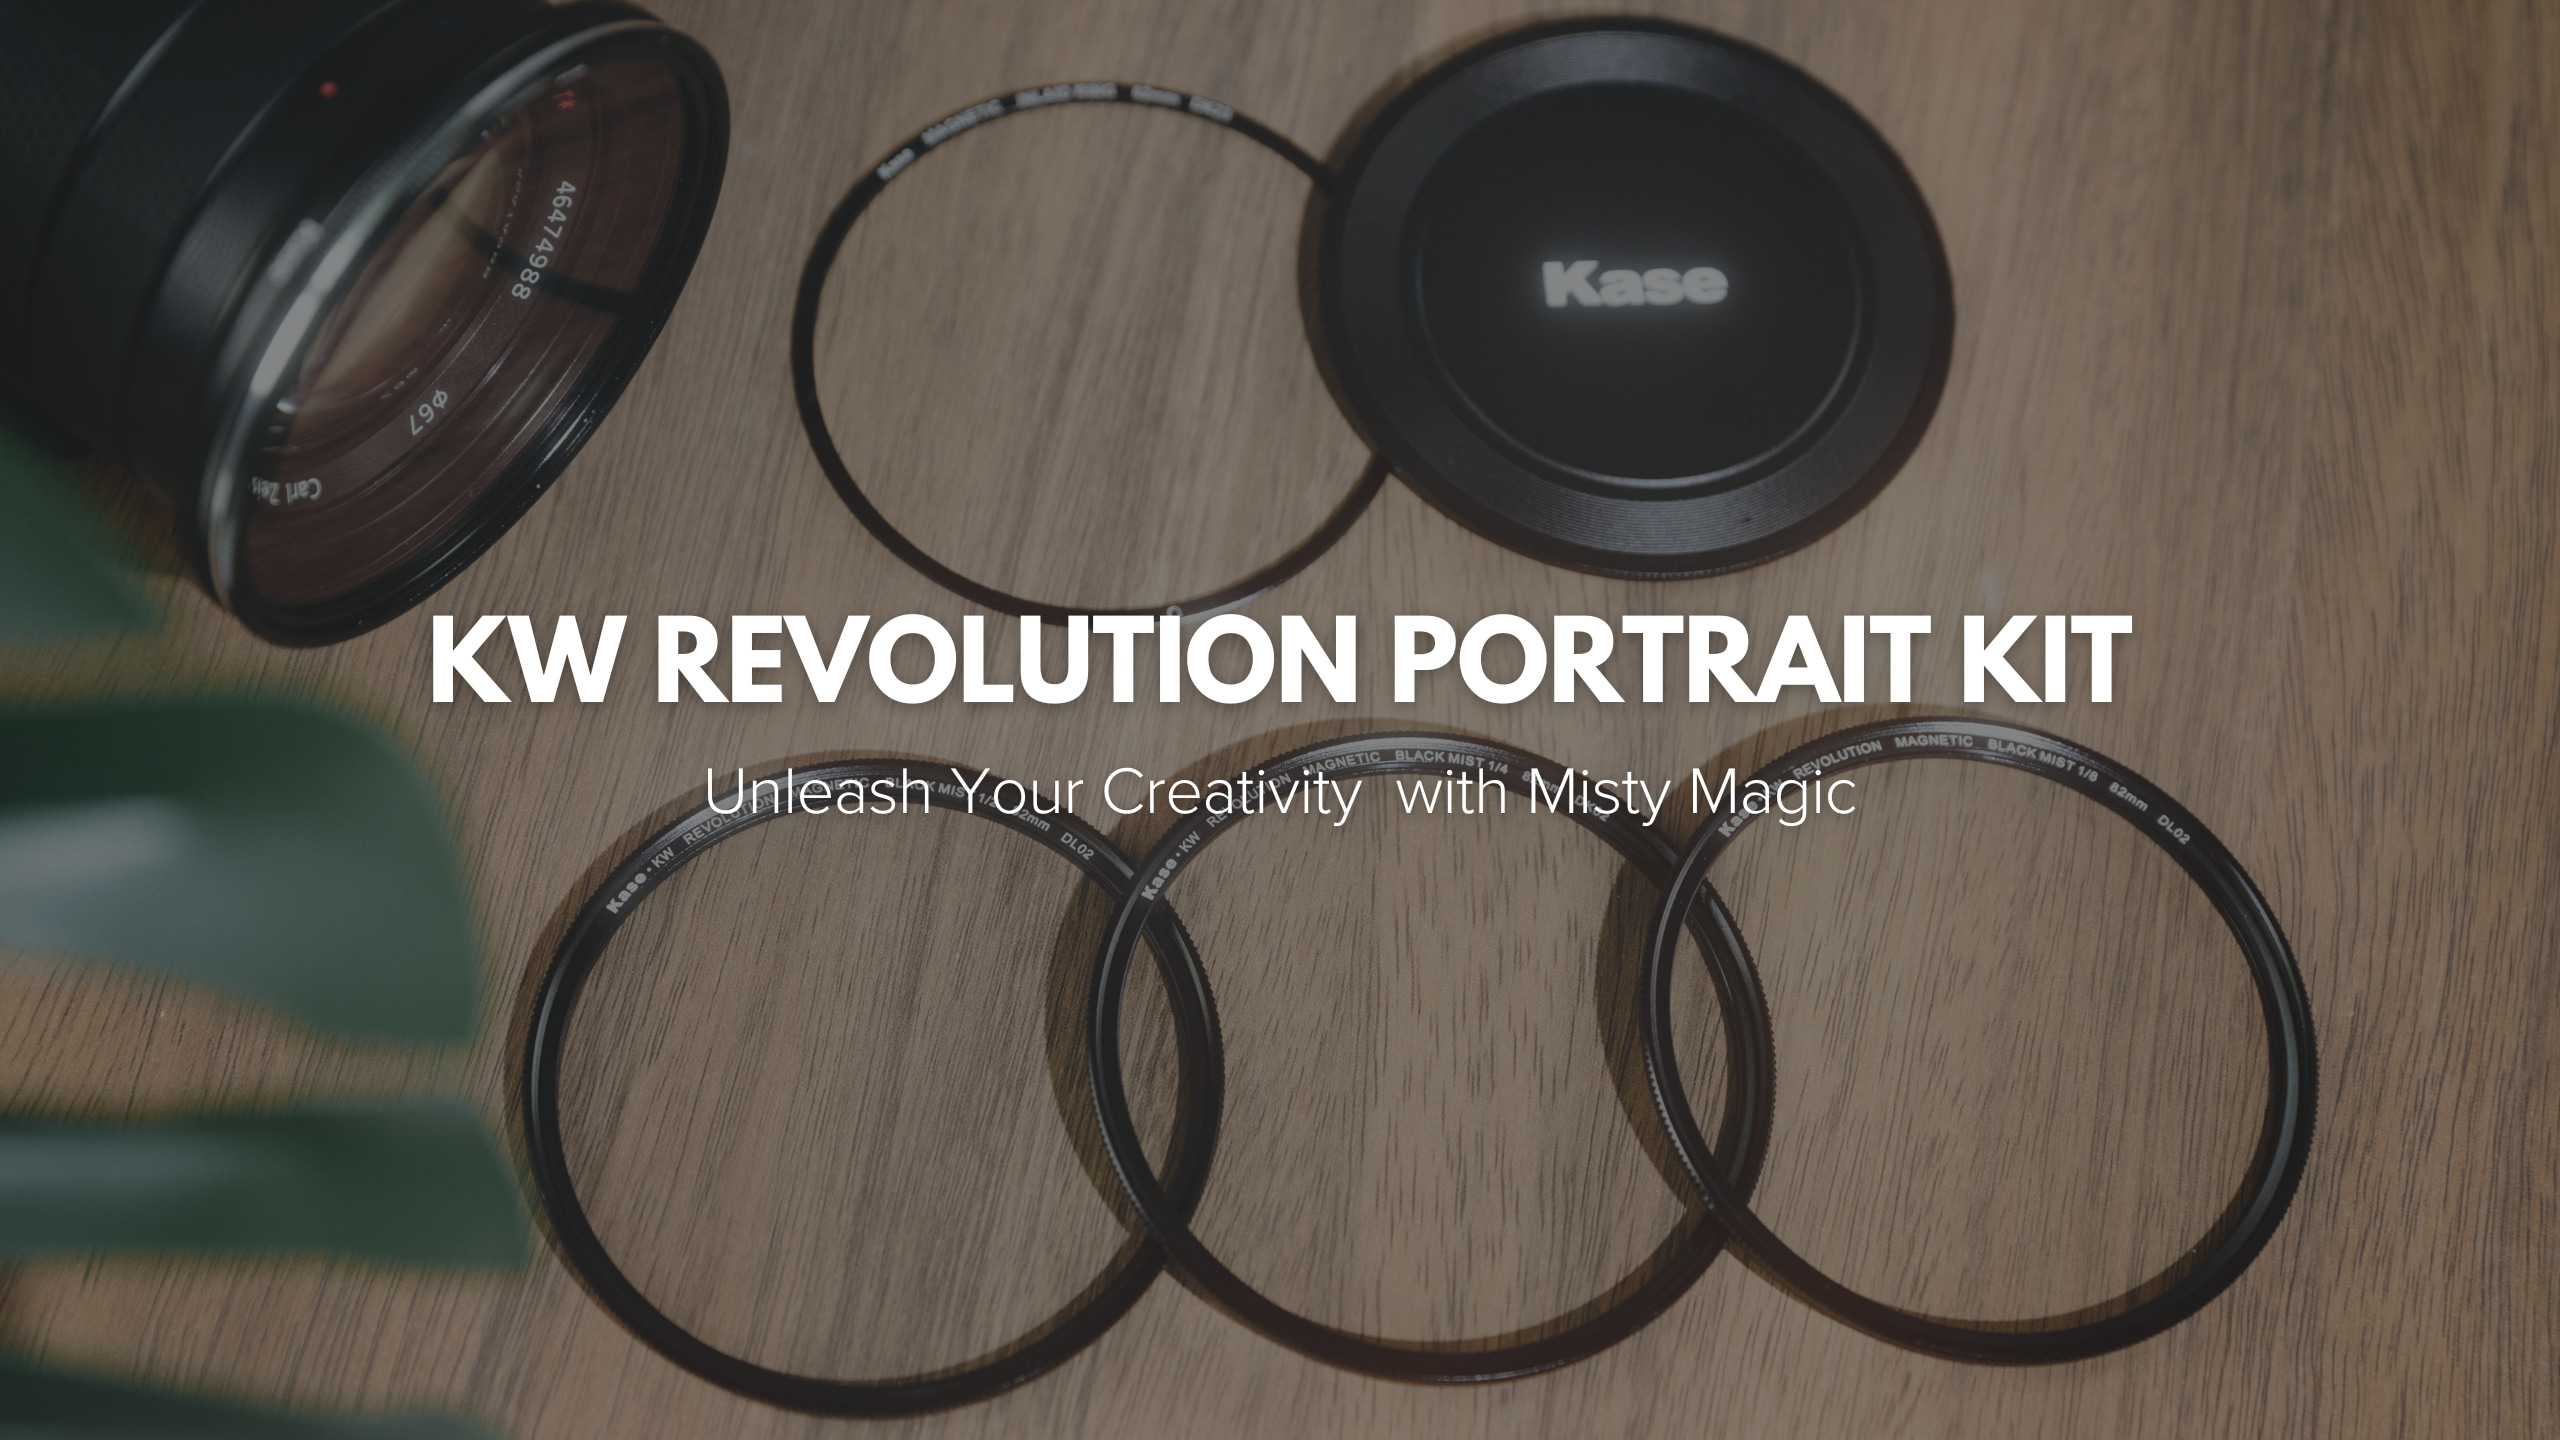 Kase KW Revolution Portrait Kit